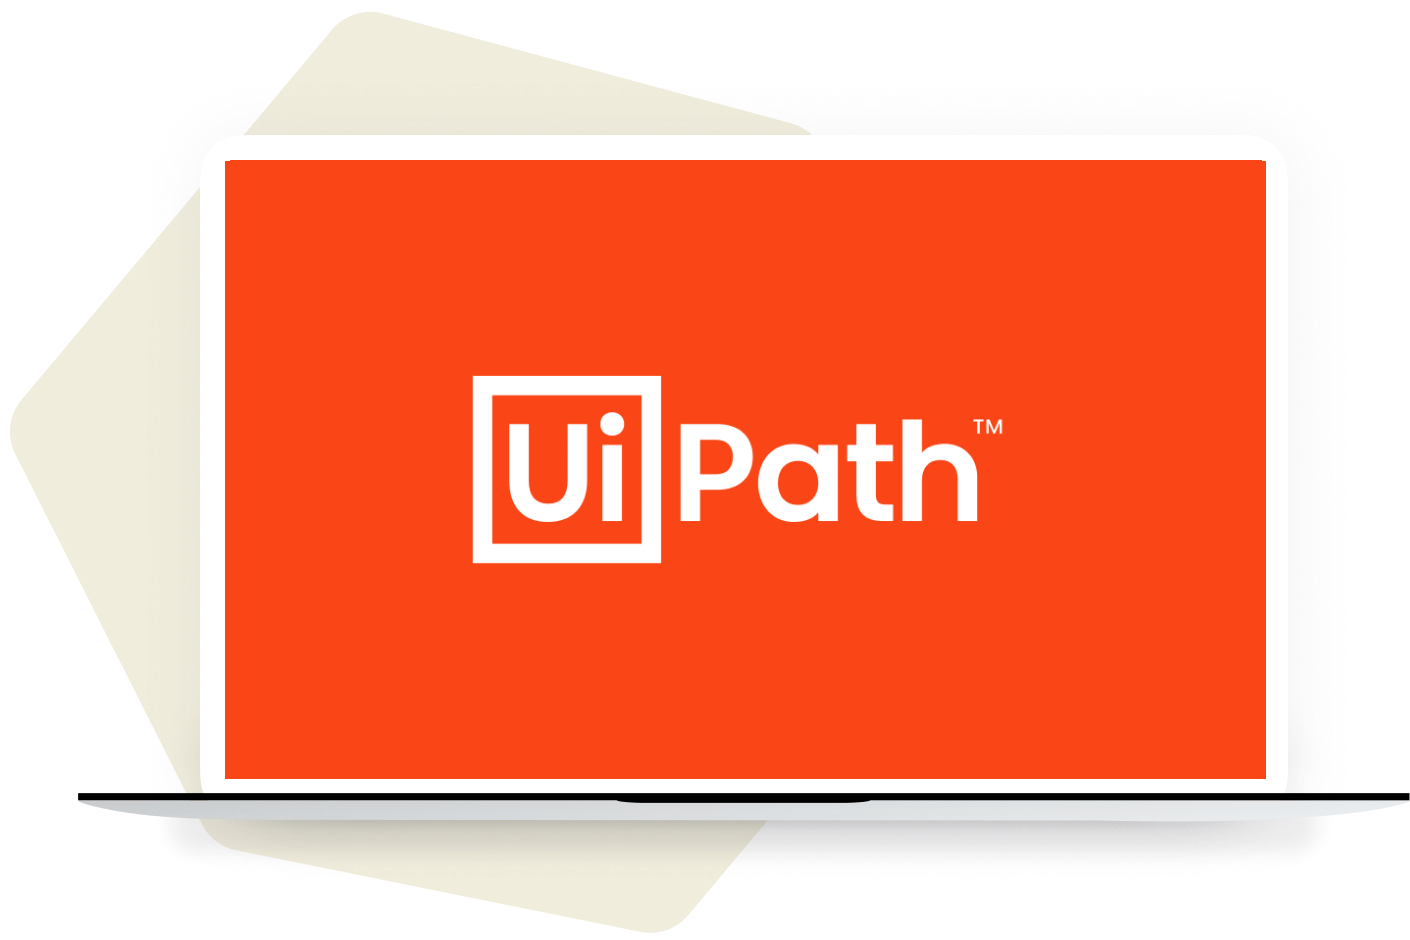 UiPath Partners consultants